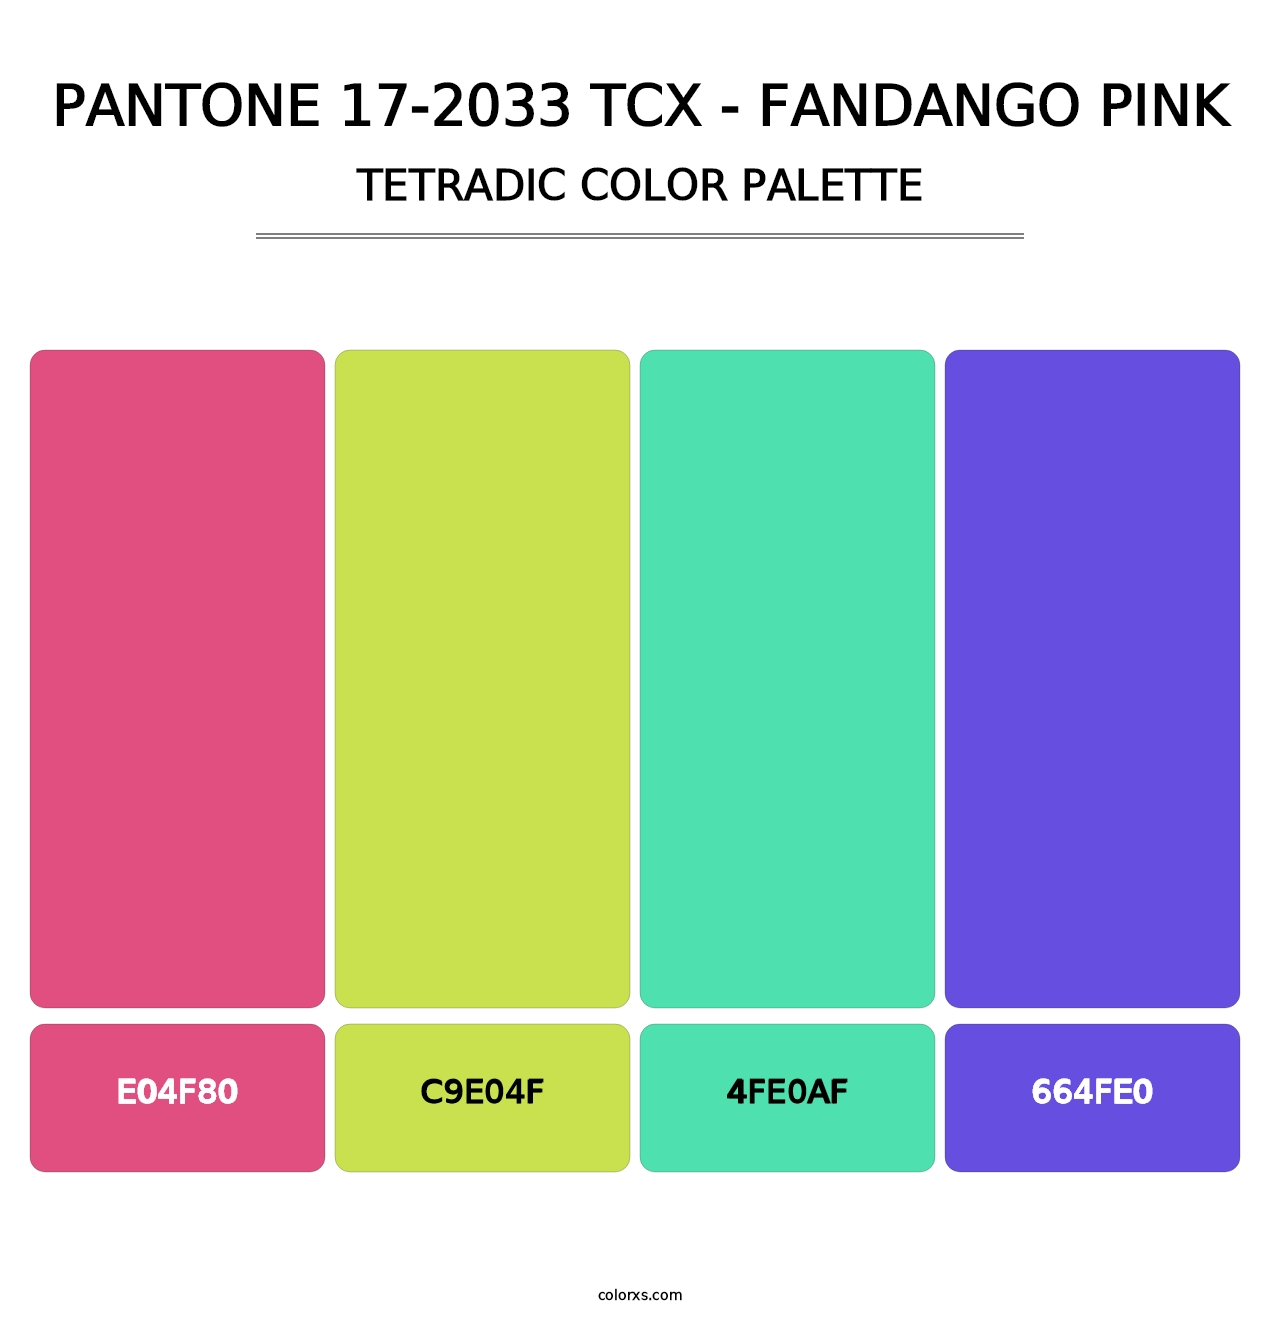 PANTONE 17-2033 TCX - Fandango Pink - Tetradic Color Palette